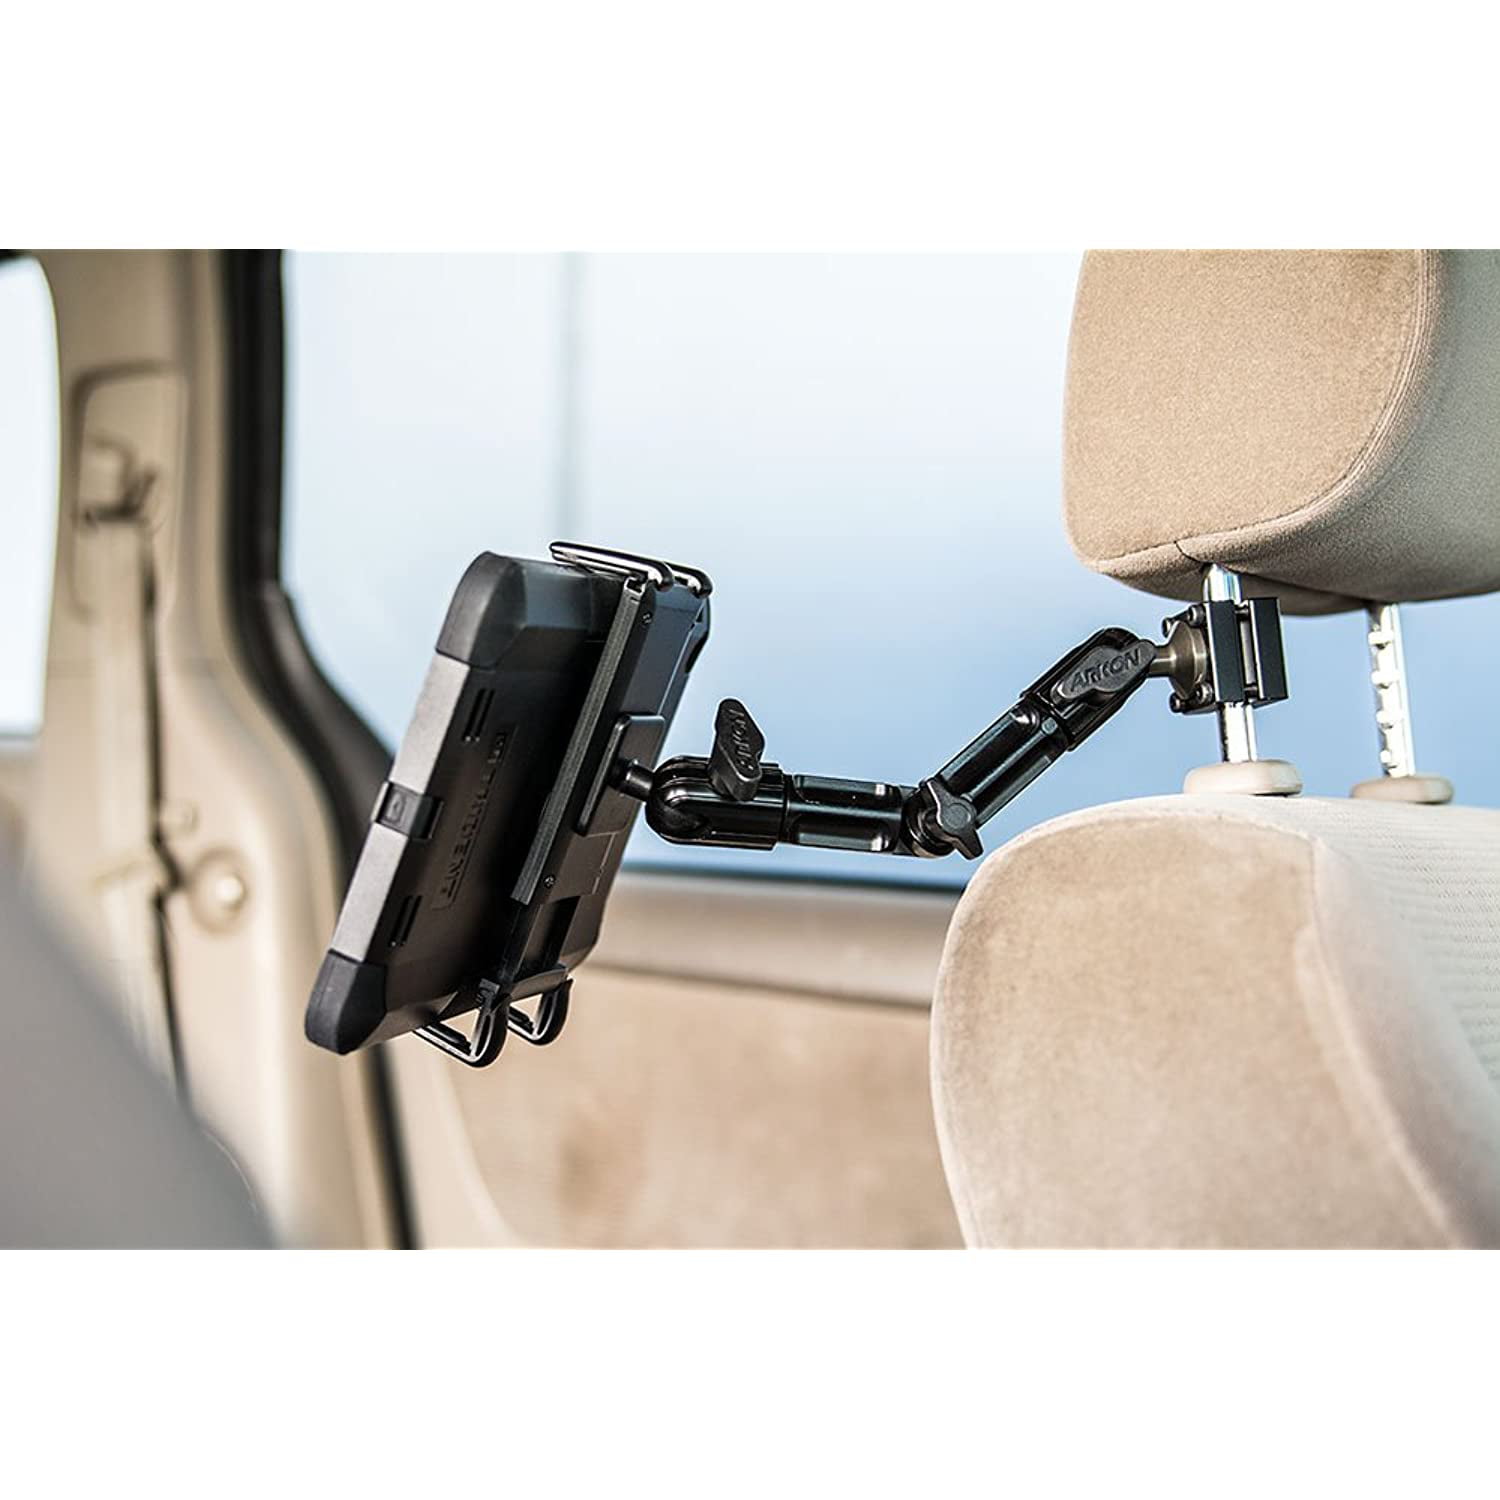 Arkon Phone and Midsize Tablet Car Headrest Mount for iPad Mini iPhone X 8 7 6S Plus iPhone 8 7 Retail Black